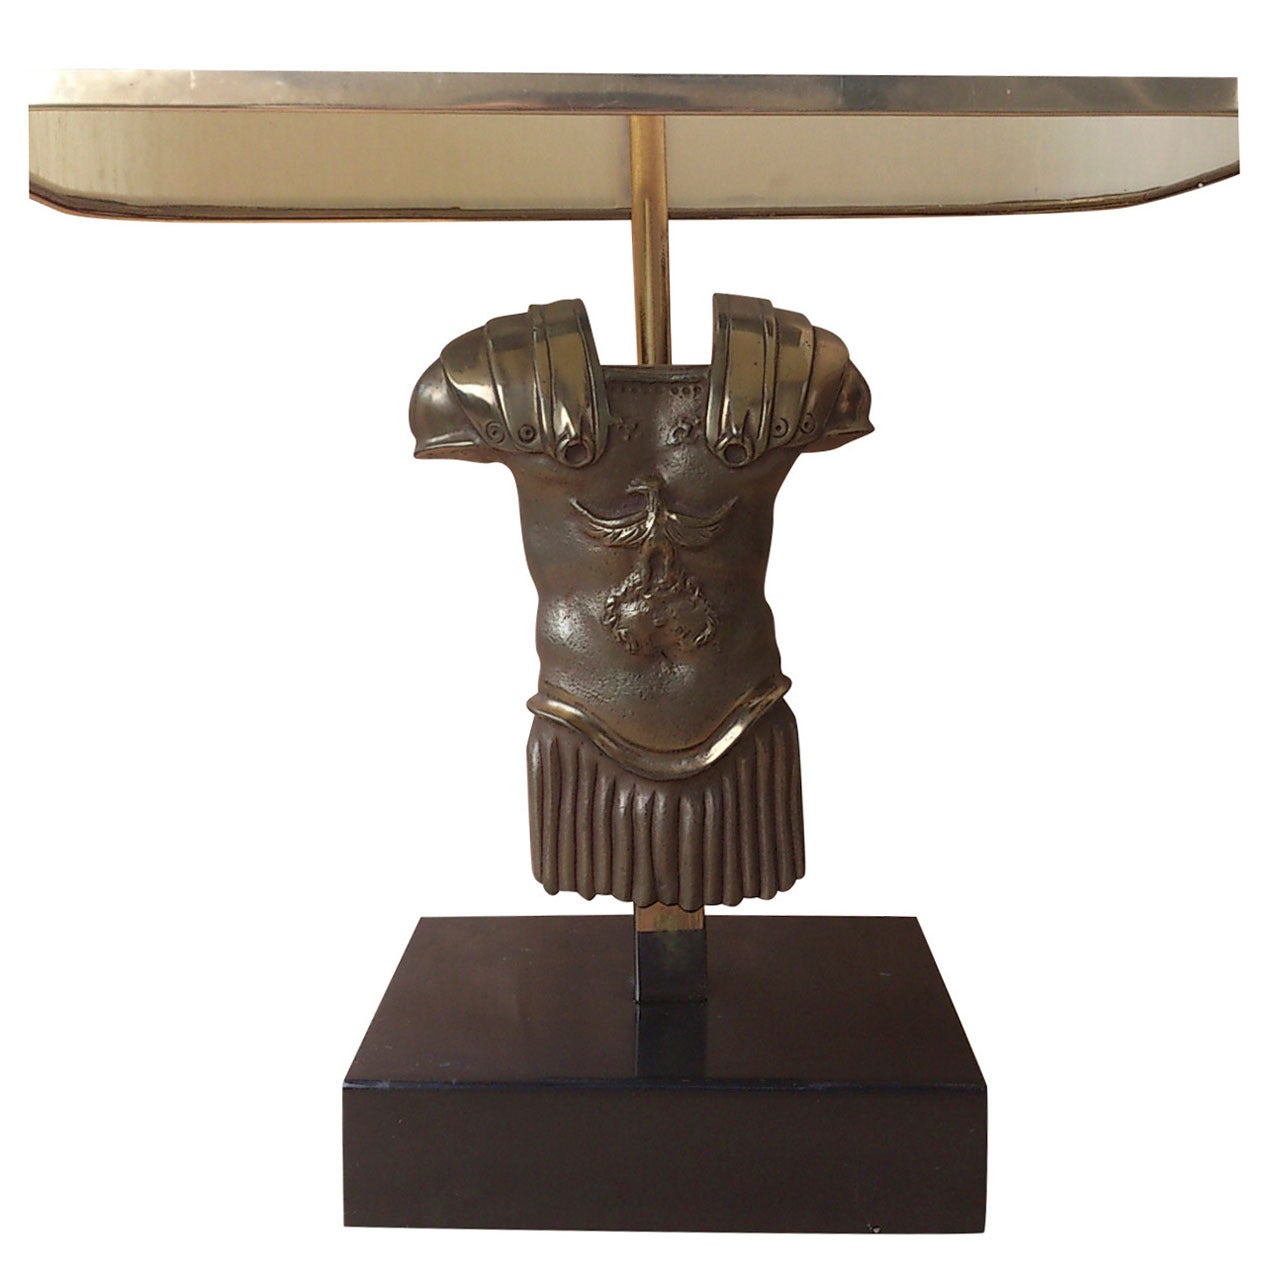 Stunning centurion torso bronze lamp, bronze sculpture, Art du Bronze
France, 1970s
Signed on the back
European socket and wiring.